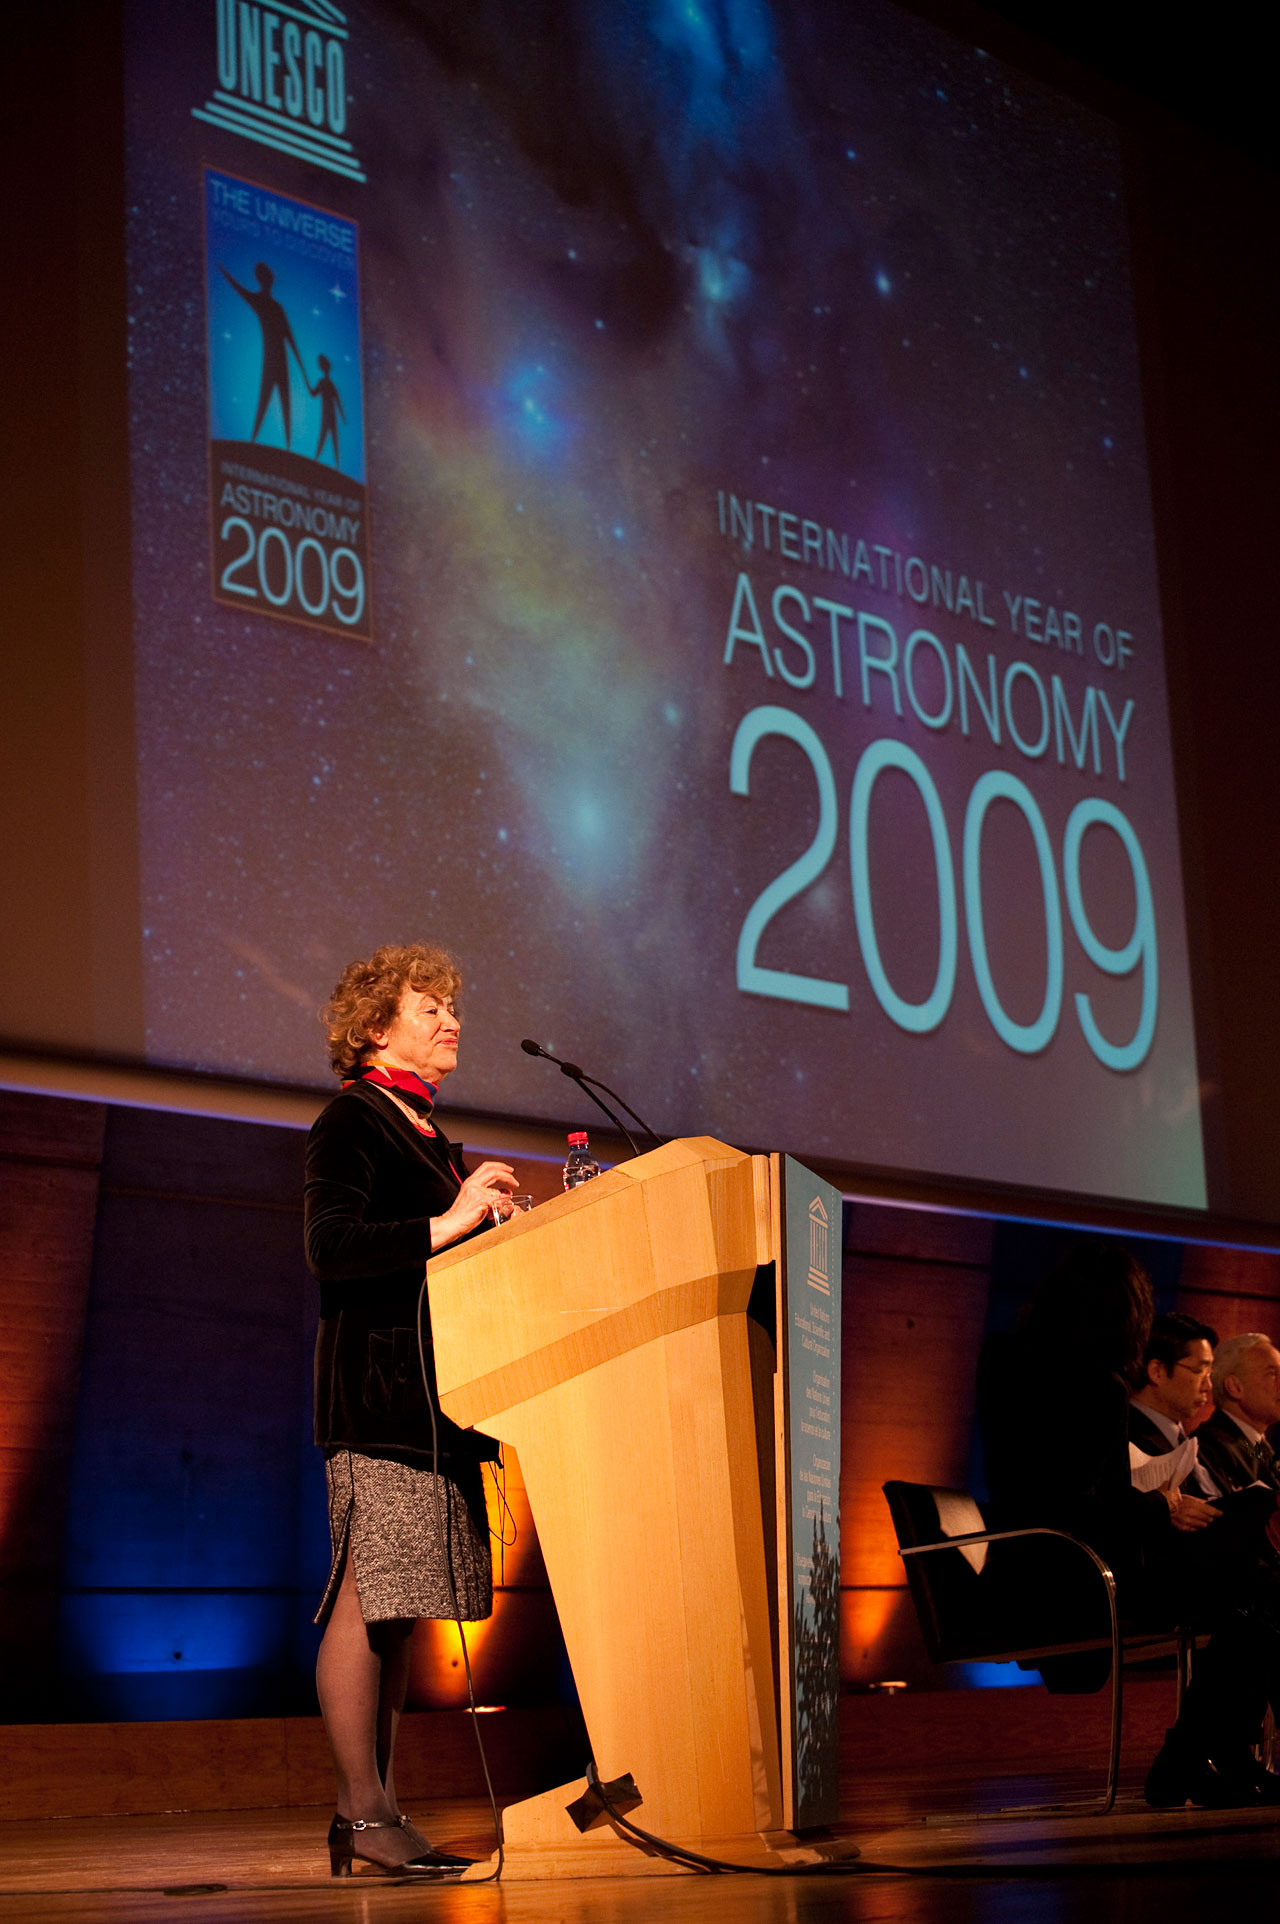 IAU President Catherine Cesarsky opening the International Year of Astronomy 2009